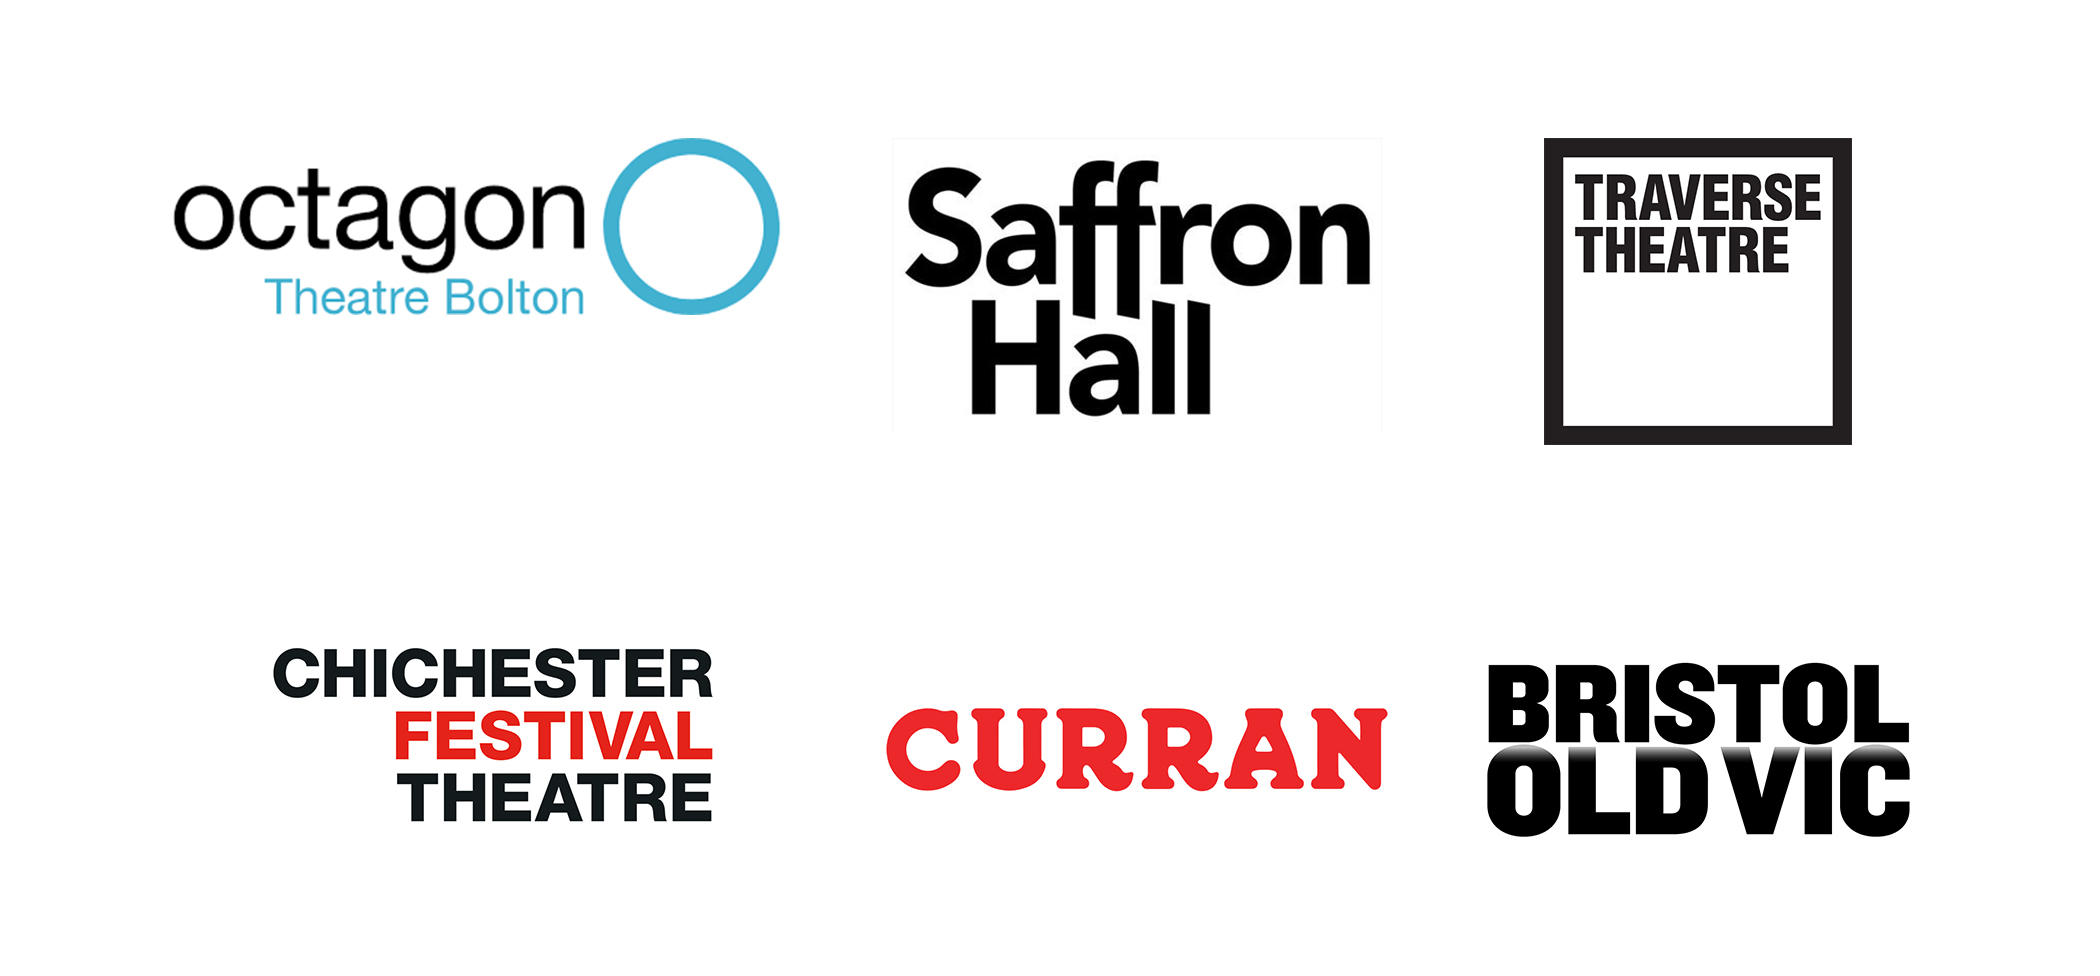 Logos of user organisations involved: Octagon Theatre Bolton, Saffron Hall, Traverse Theatre, Chichester Festival Theatre, Curran, Bristol Old Vic